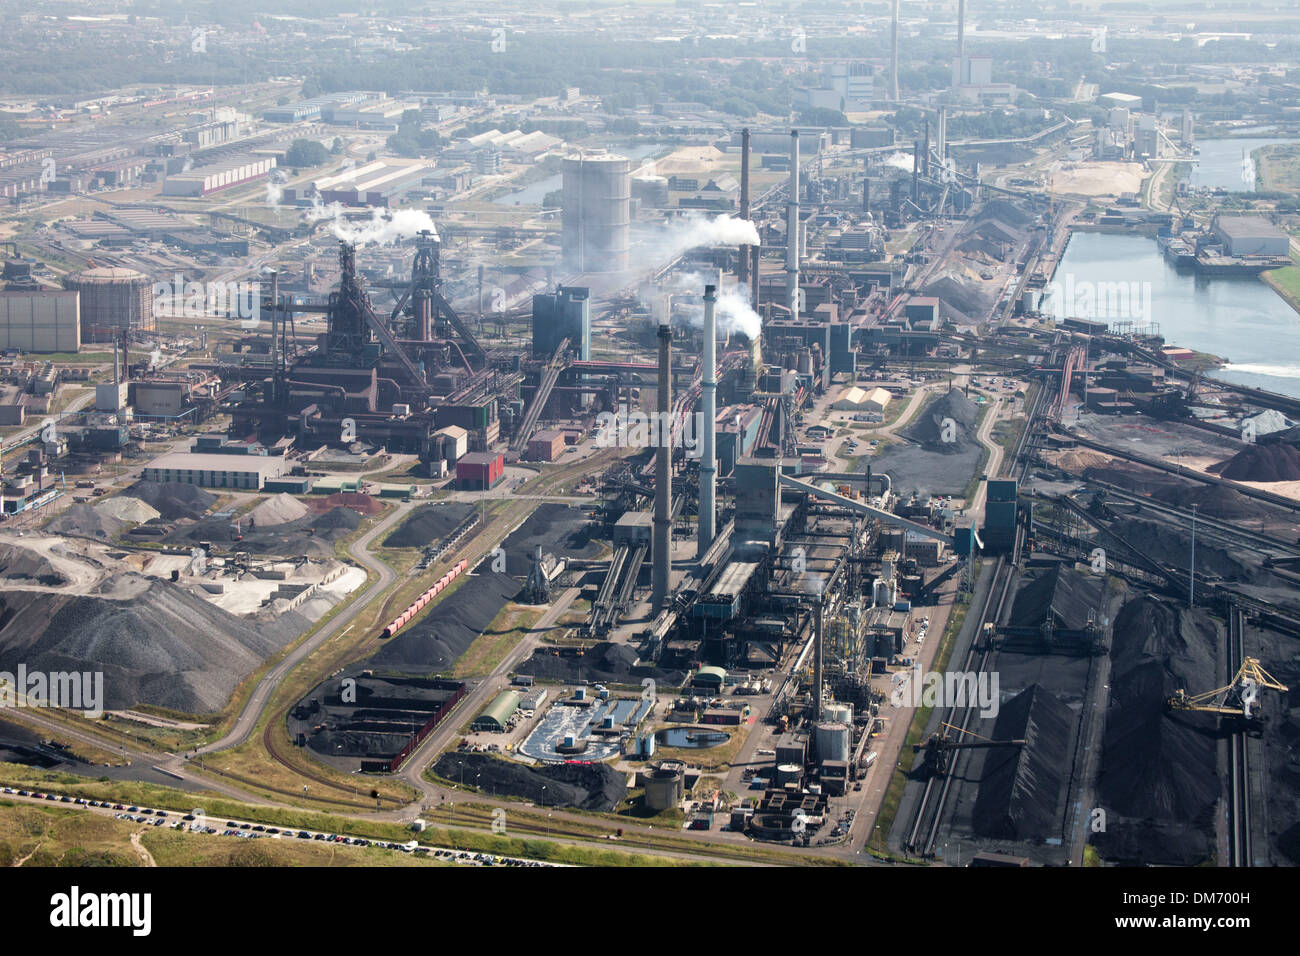 Tata Steel IJmuiden - Wikidata